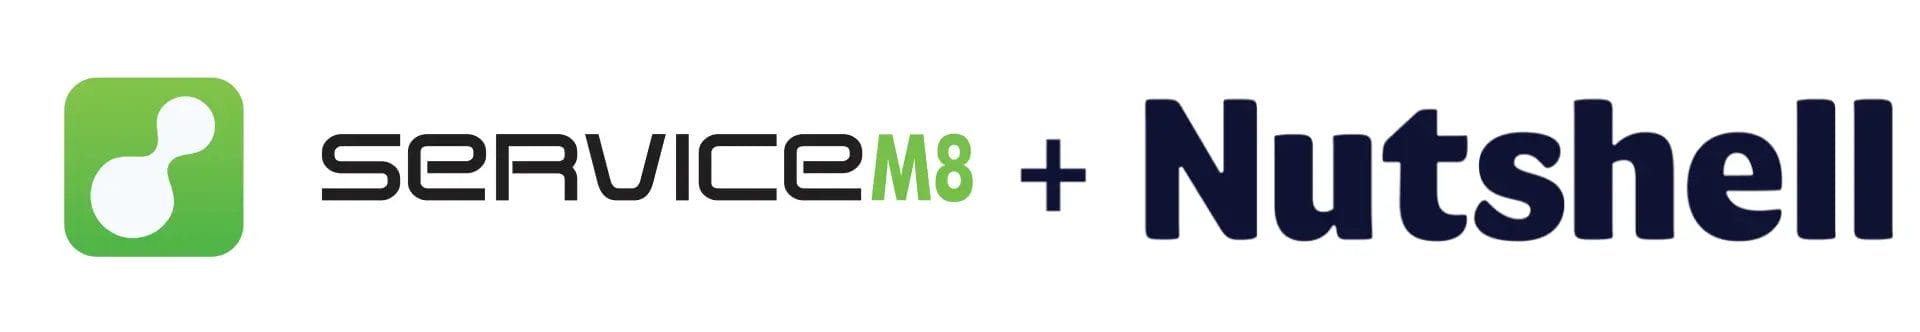 Servicem8 and Nutshell logos integration graphic